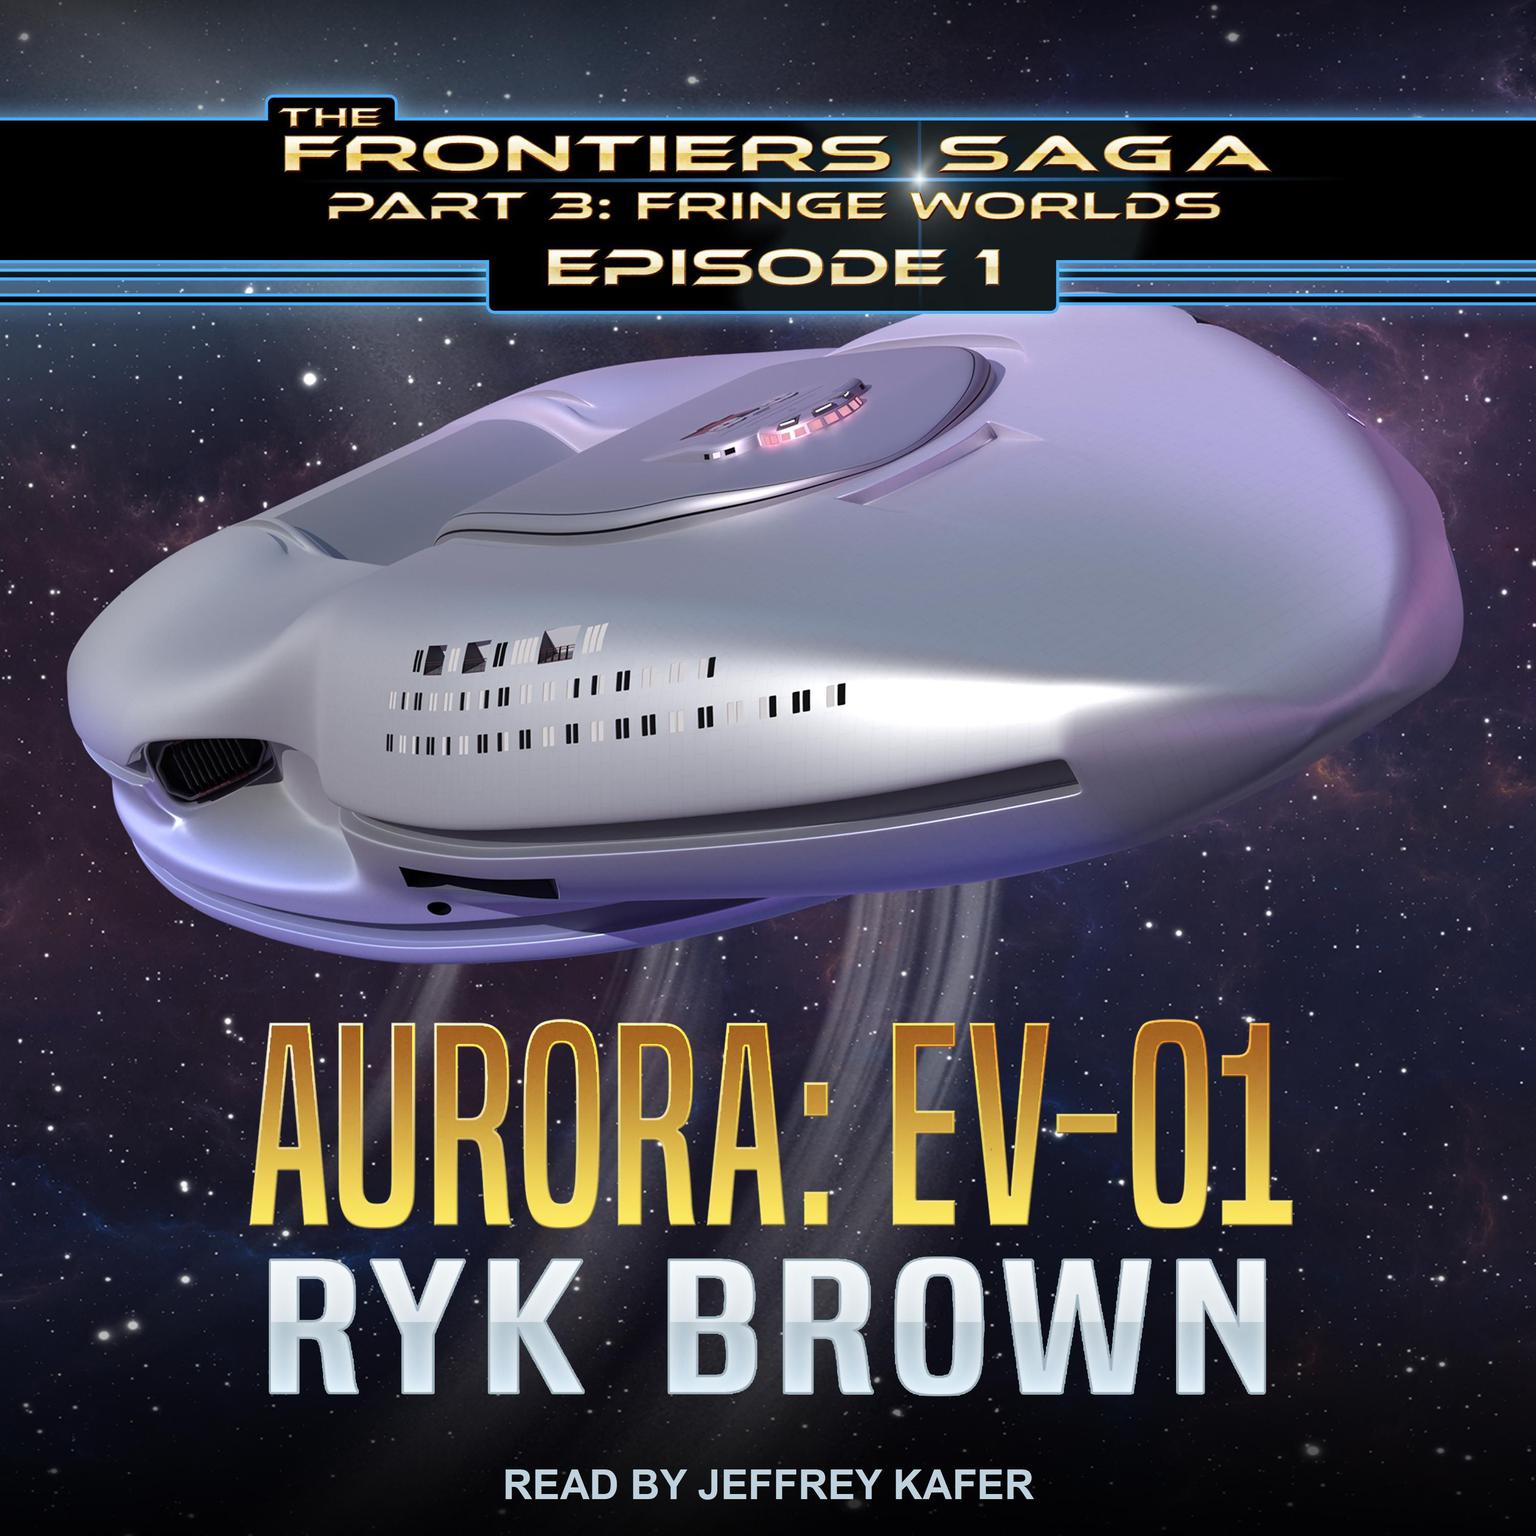 Aurora: EV-01 Audiobook, by Ryk Brown